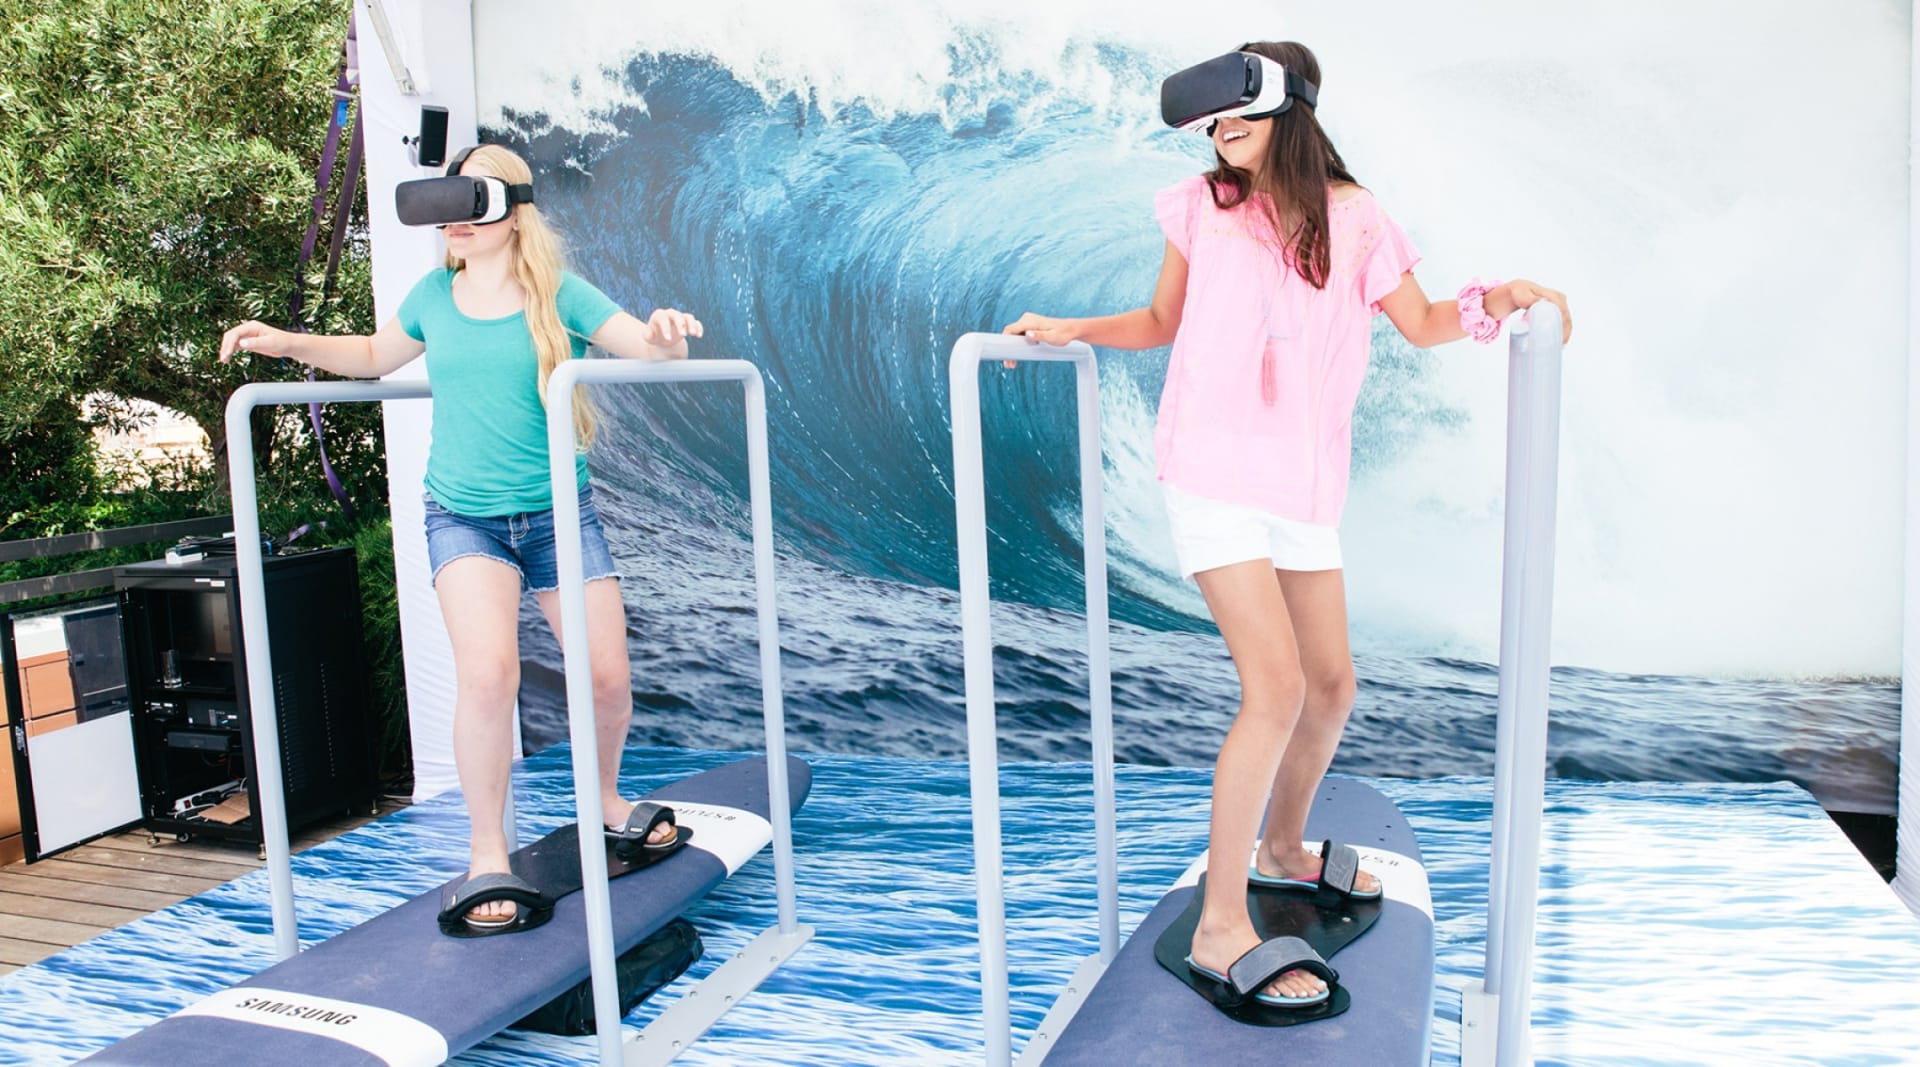 Surf-sim VR